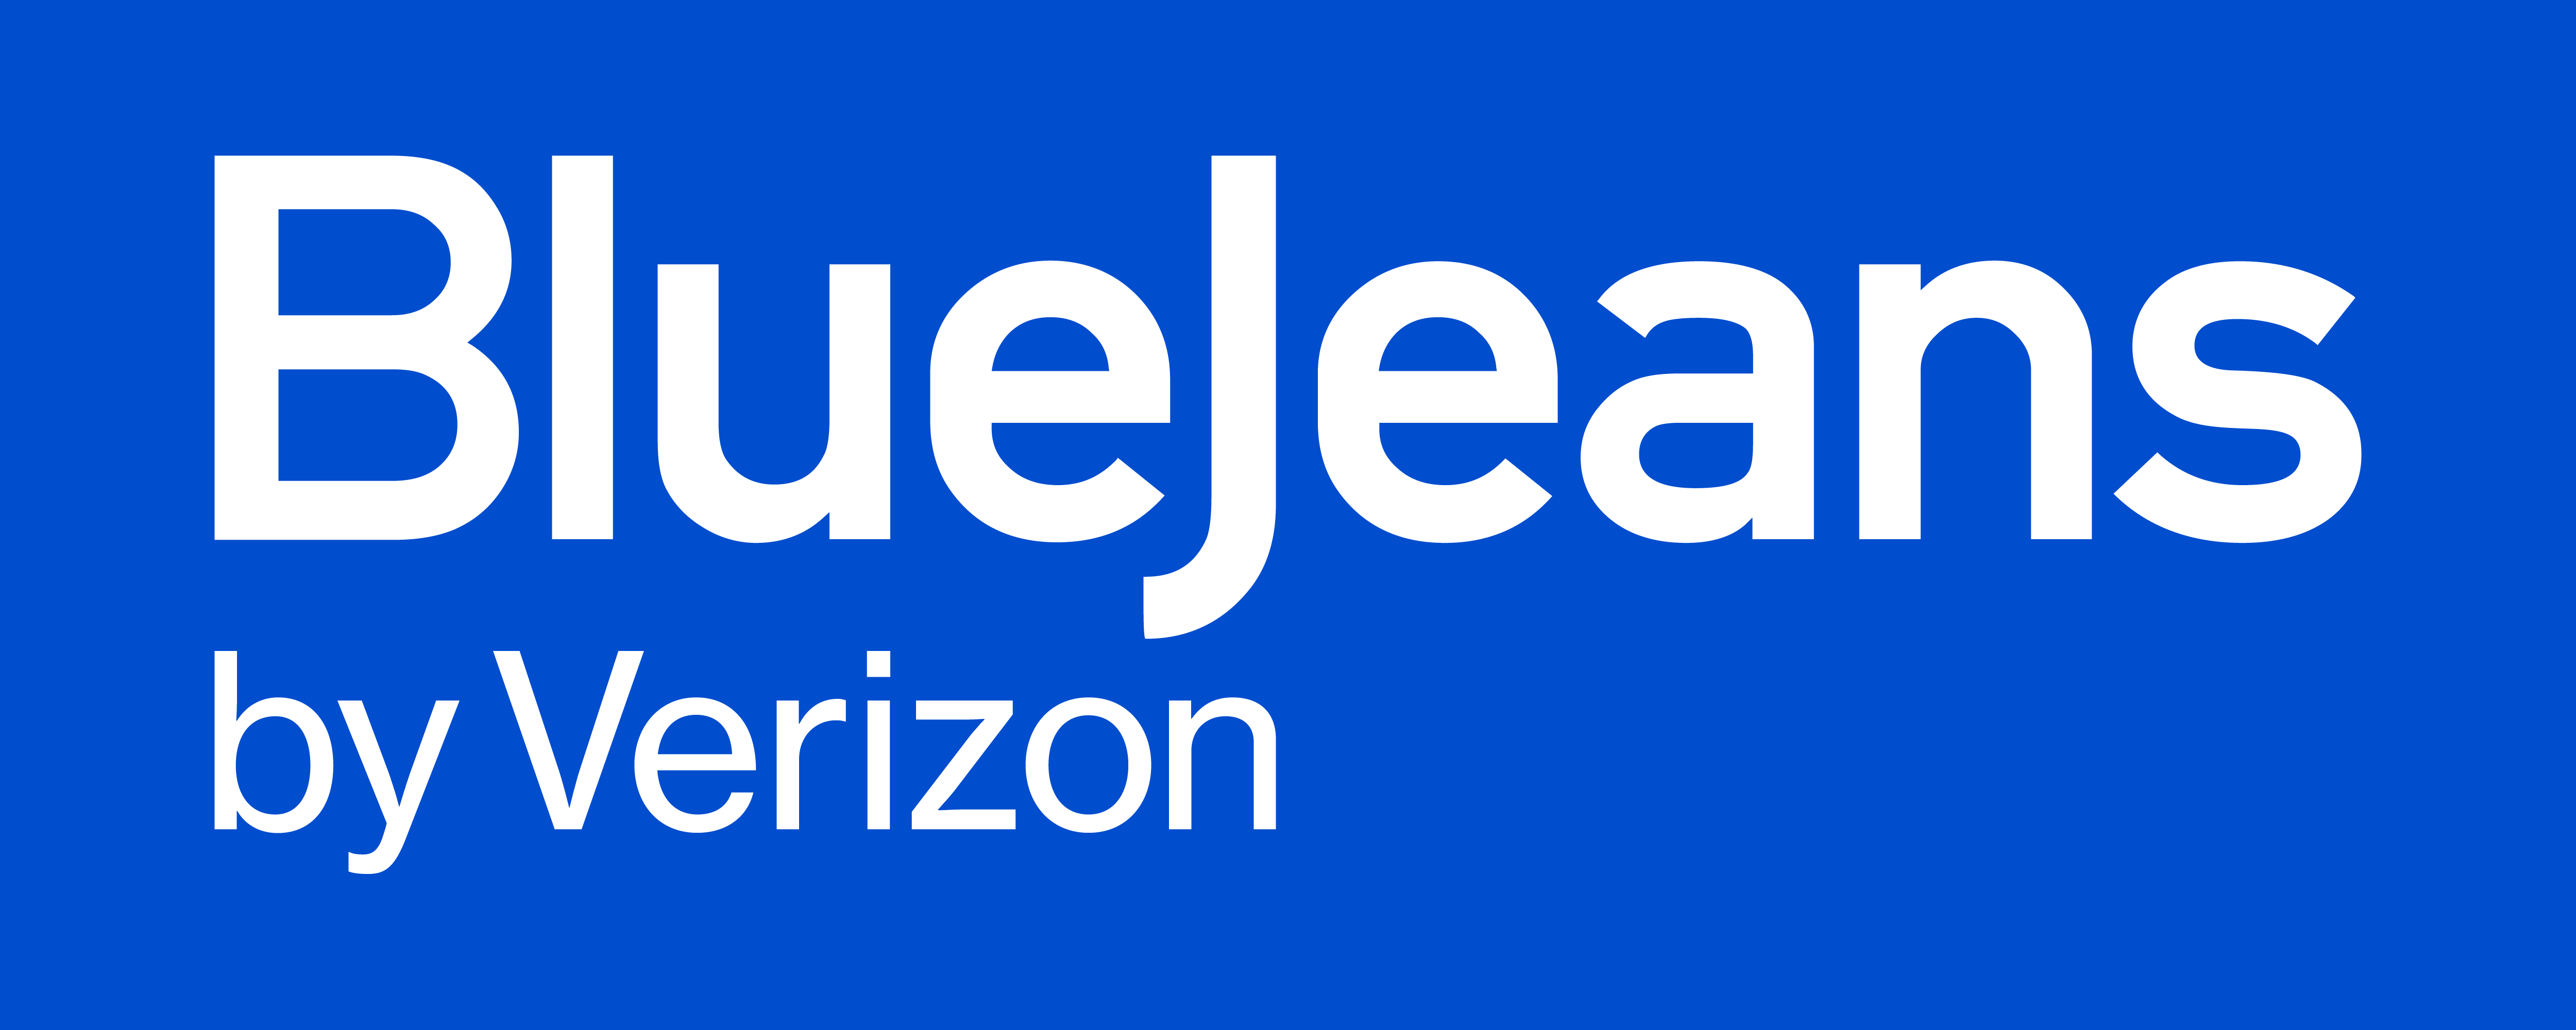 BlueJeans by Verizon logo white on blue